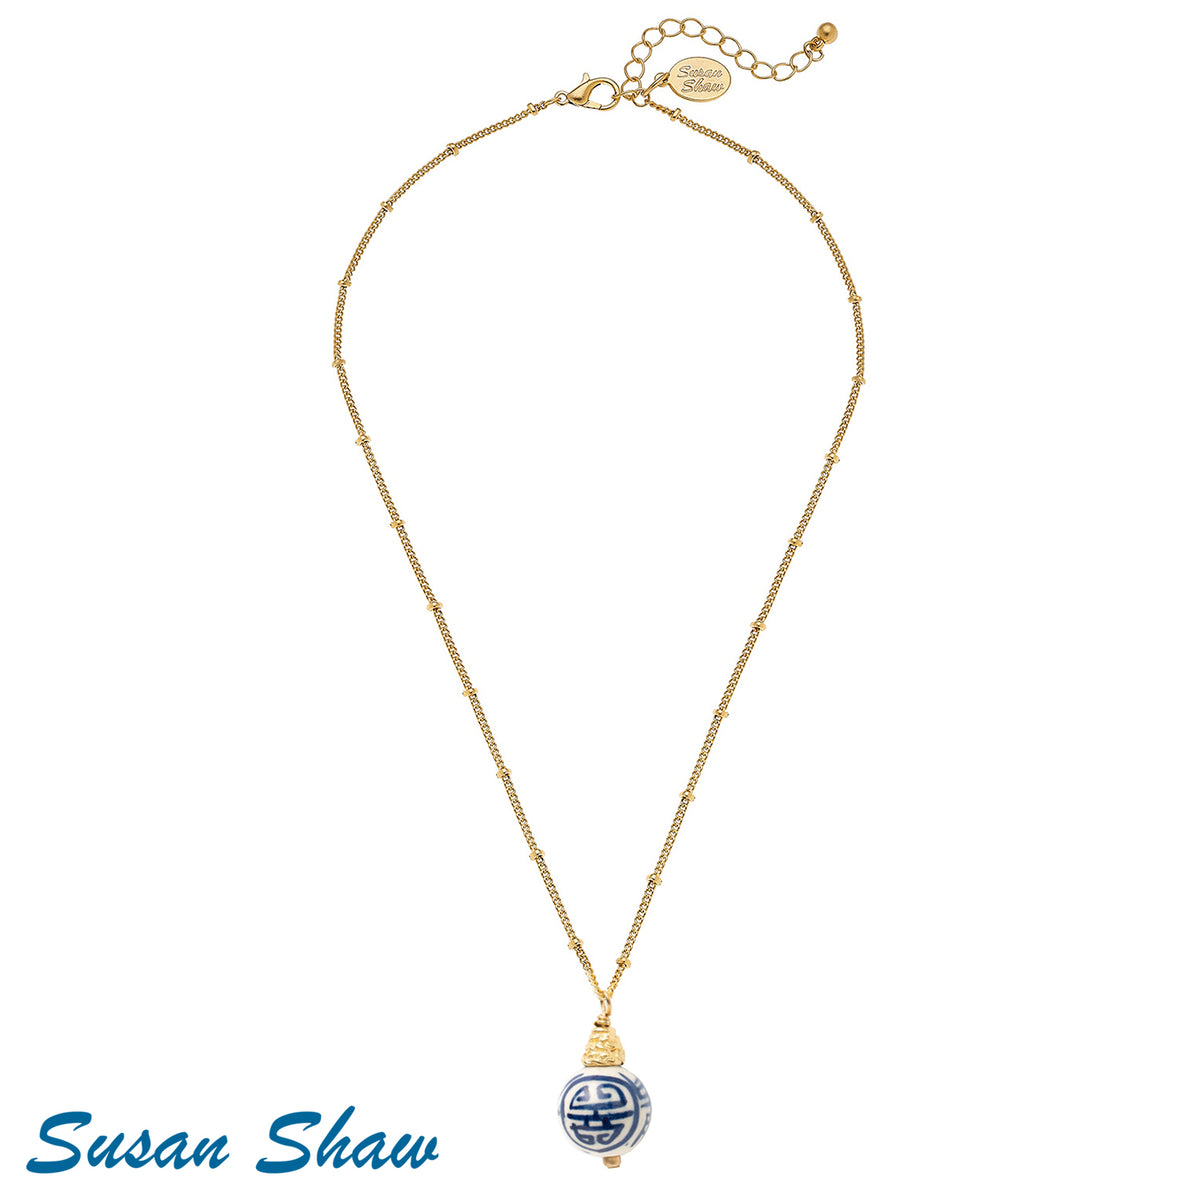 SUSAN SHAW BLUE & WHITE DAINTY DROP NECKLACE